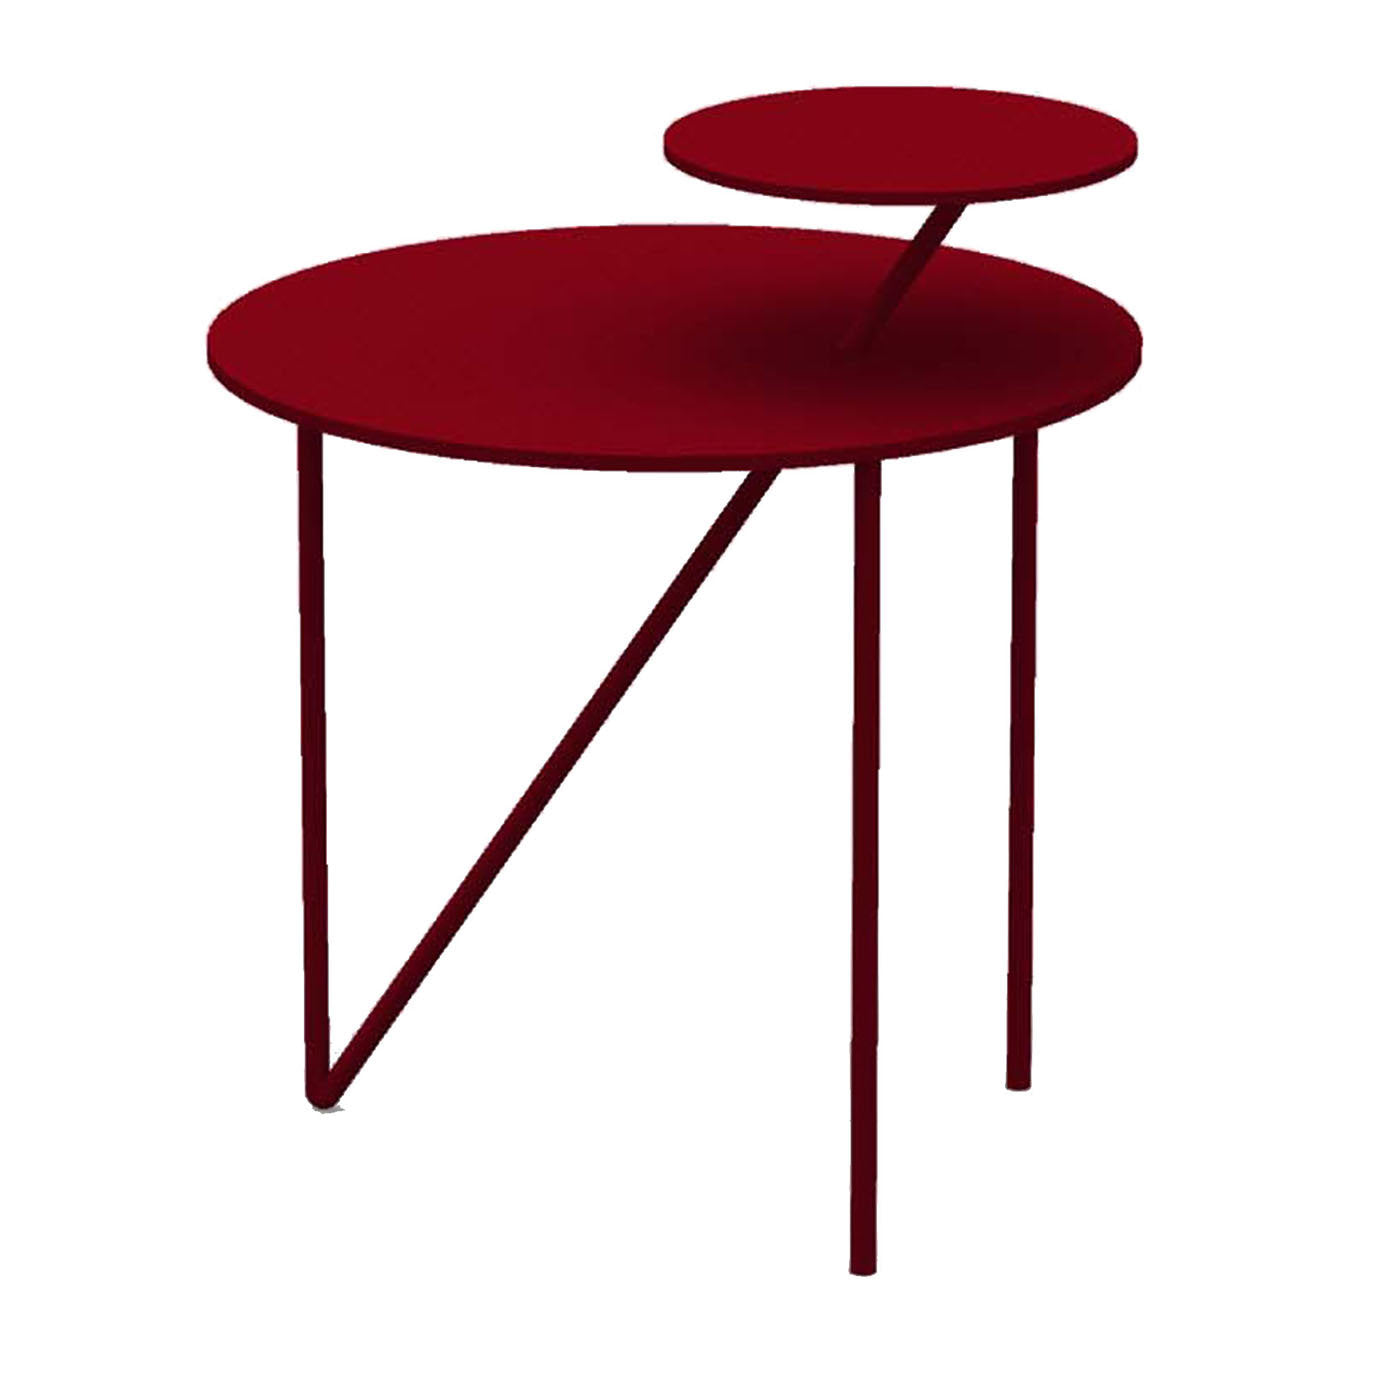 Table basse Passante rouge rubis - Vue alternative 1